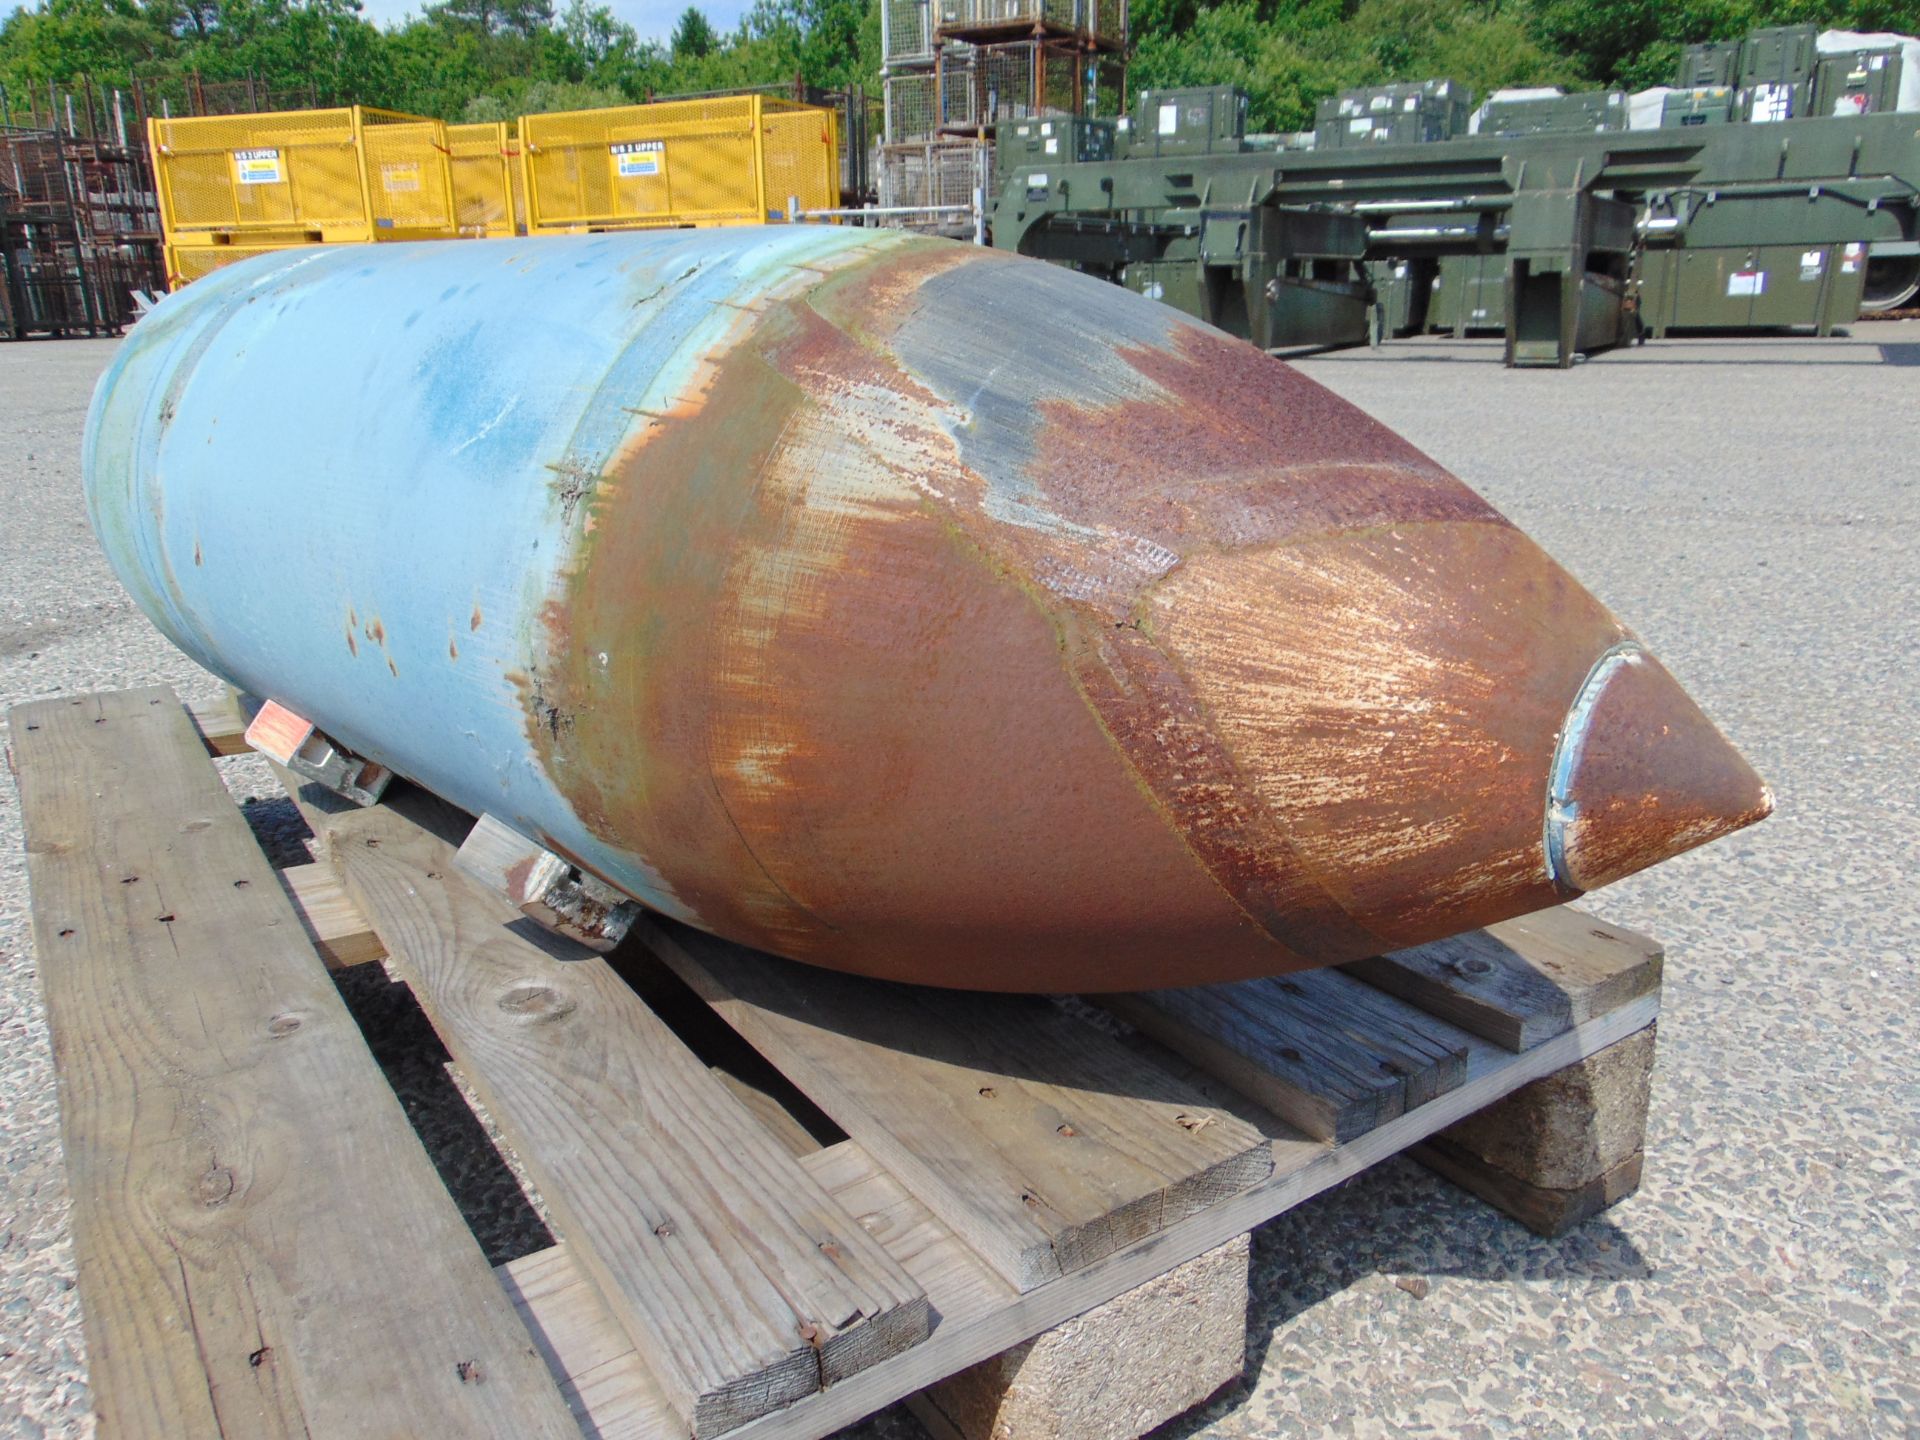 Harrier 1000lb Practice Bomb